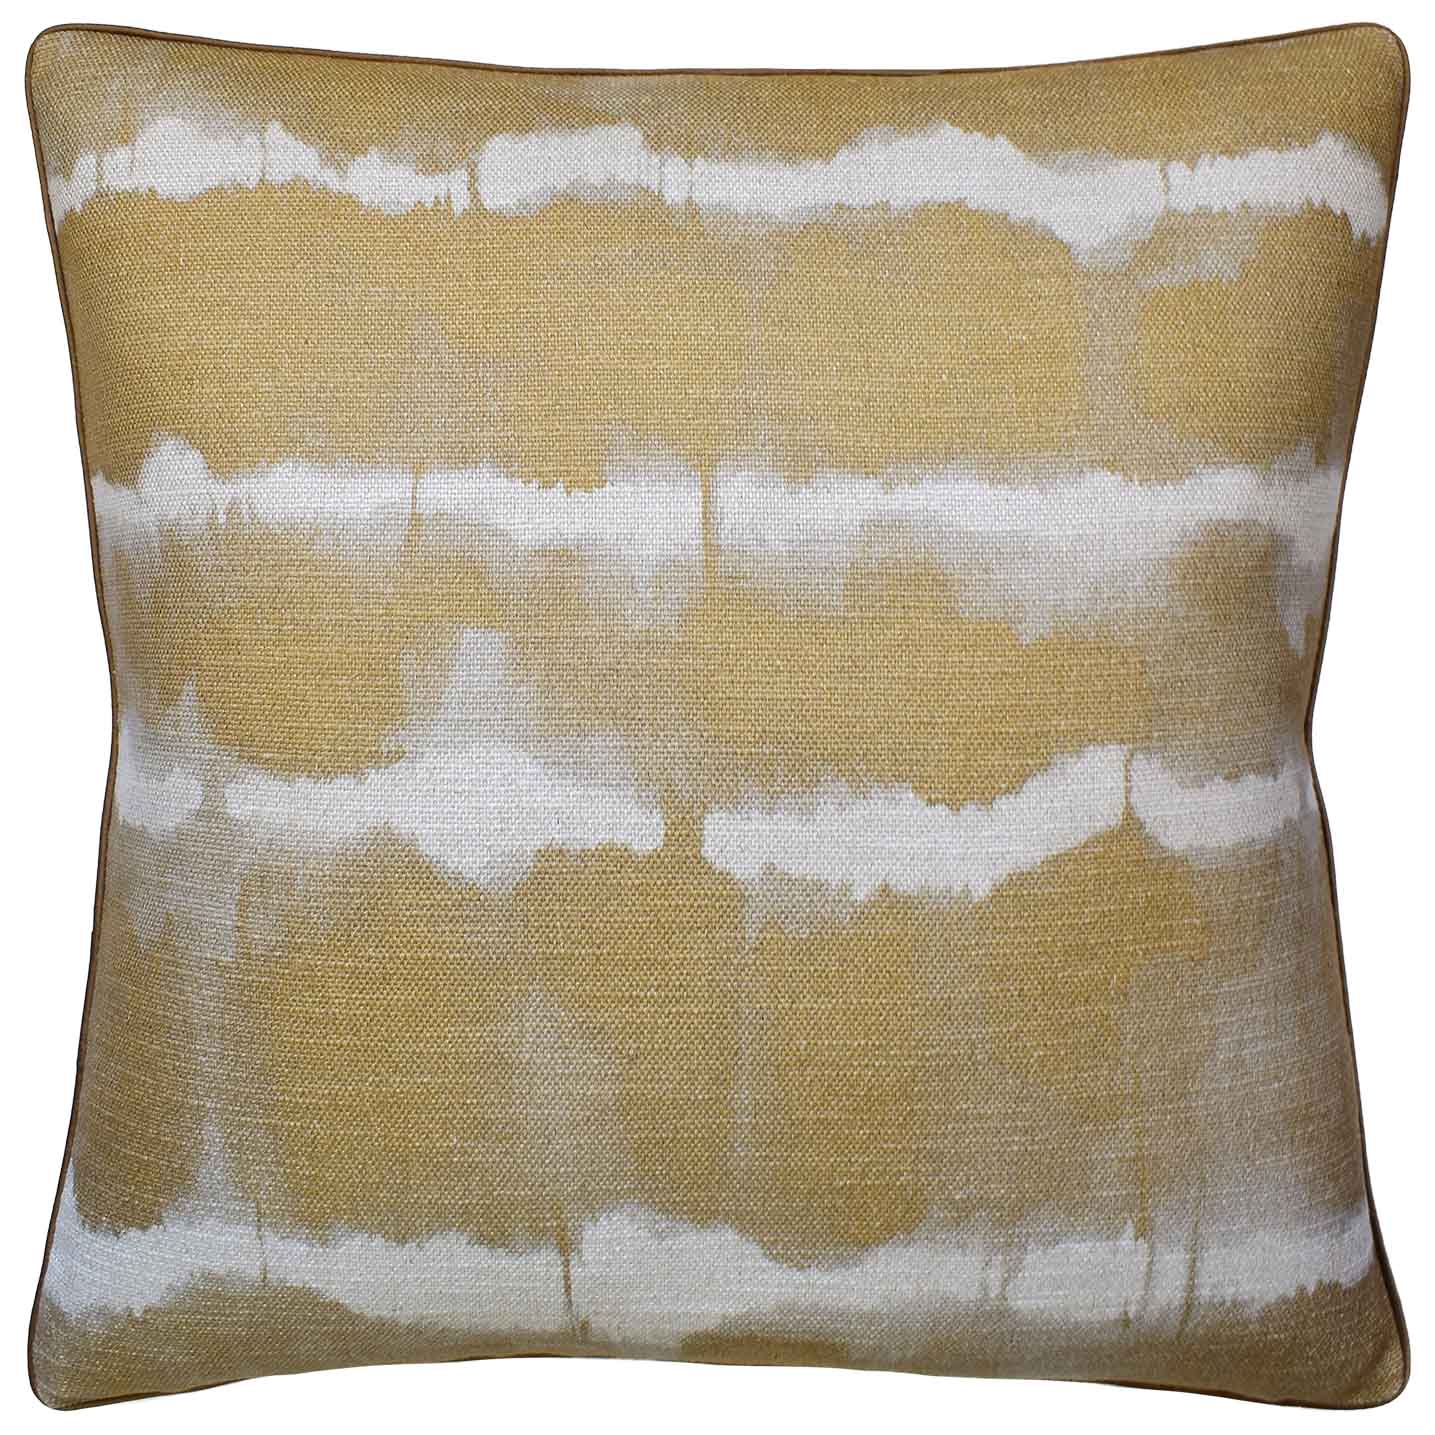 Baturi Gold - Throw Pillow by Ryan Studio